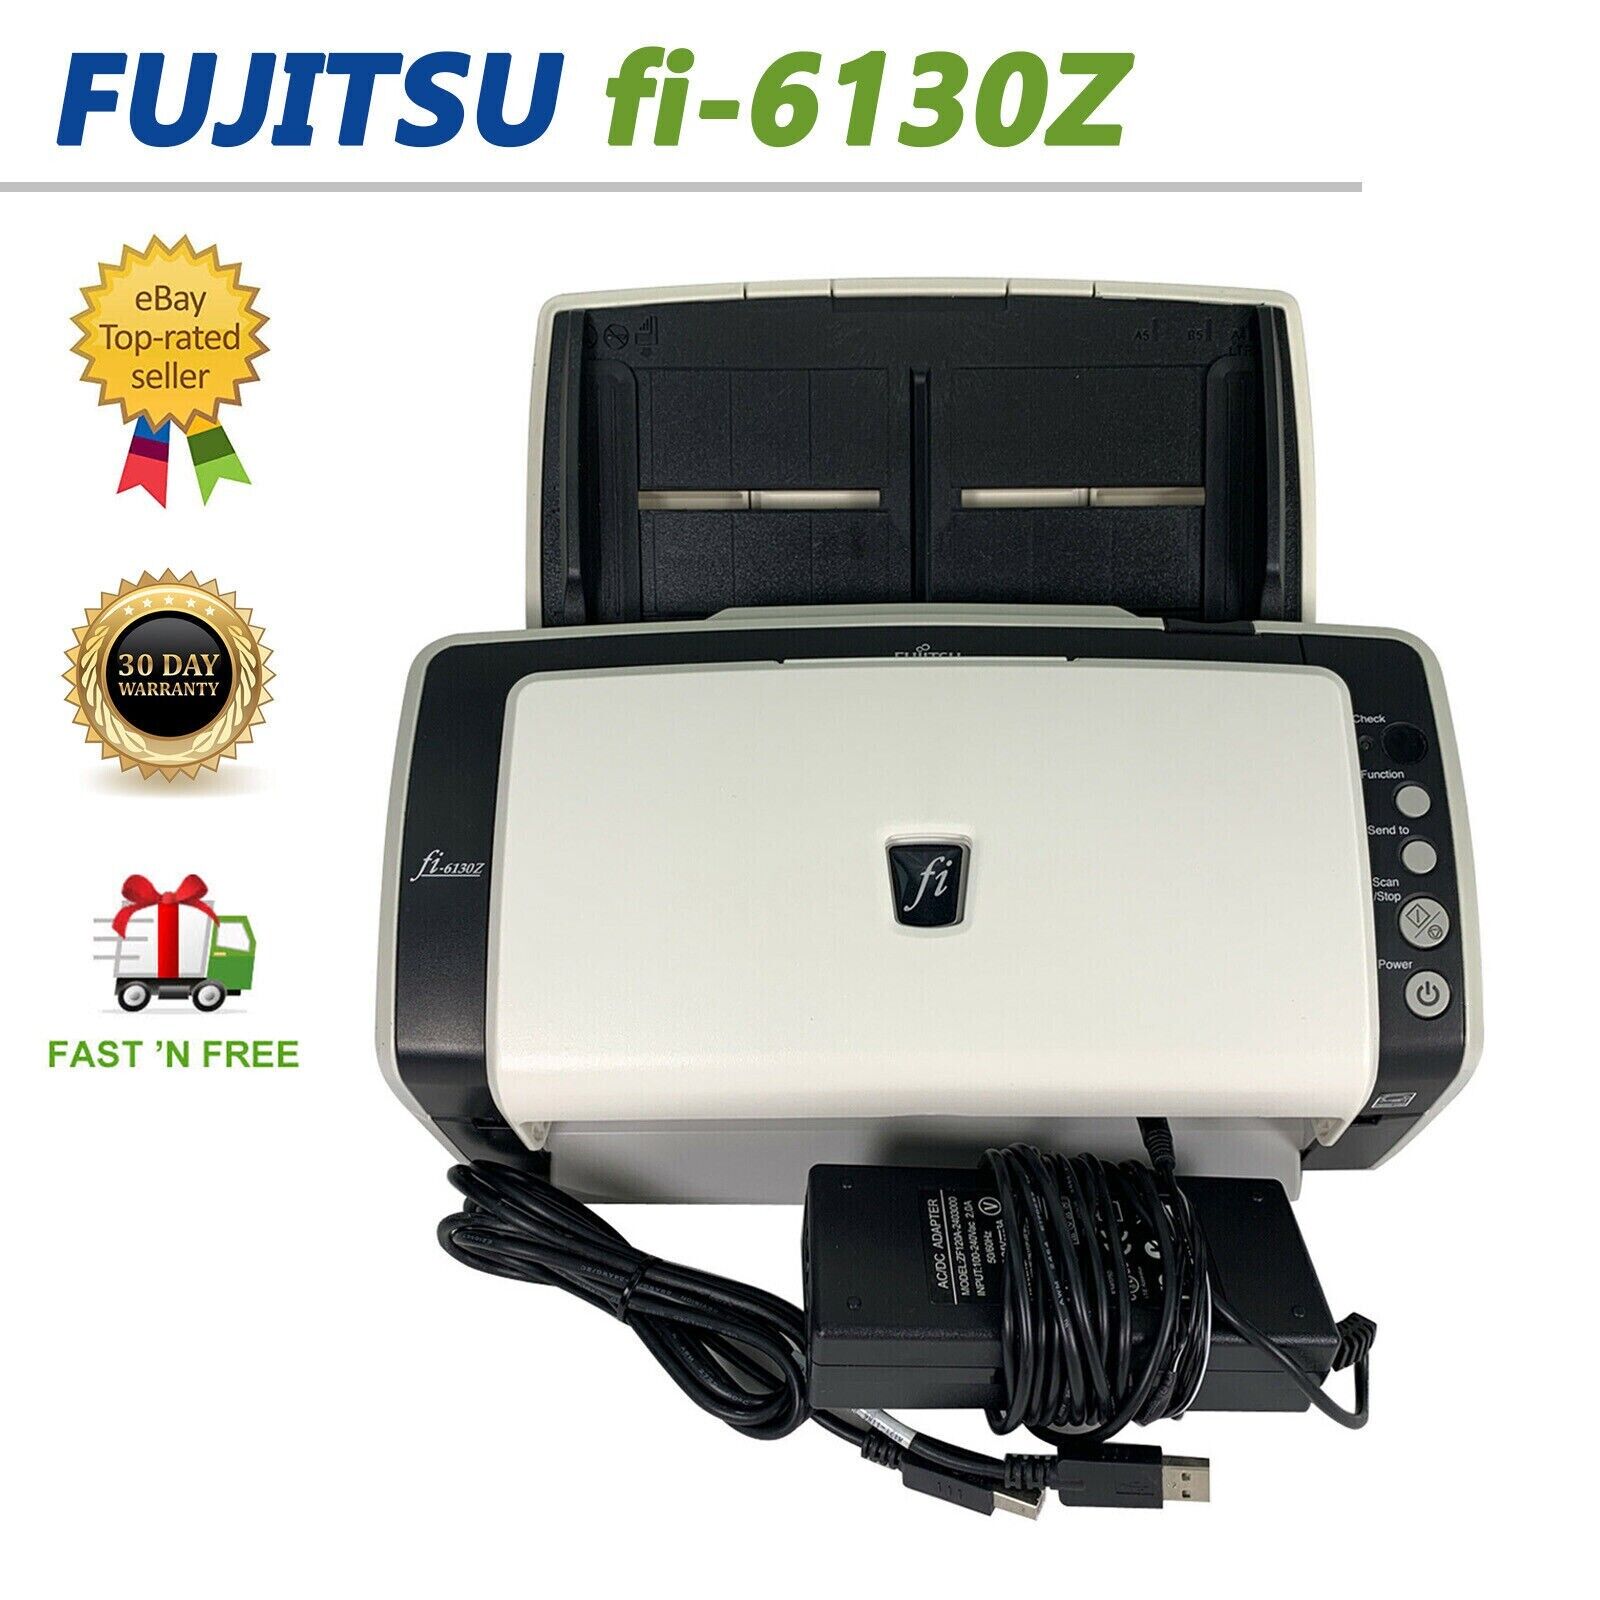 Fujitsu FI-6130Z Duplex Sheetfed Document Color Scanner PA03630-B055 w/Bundle